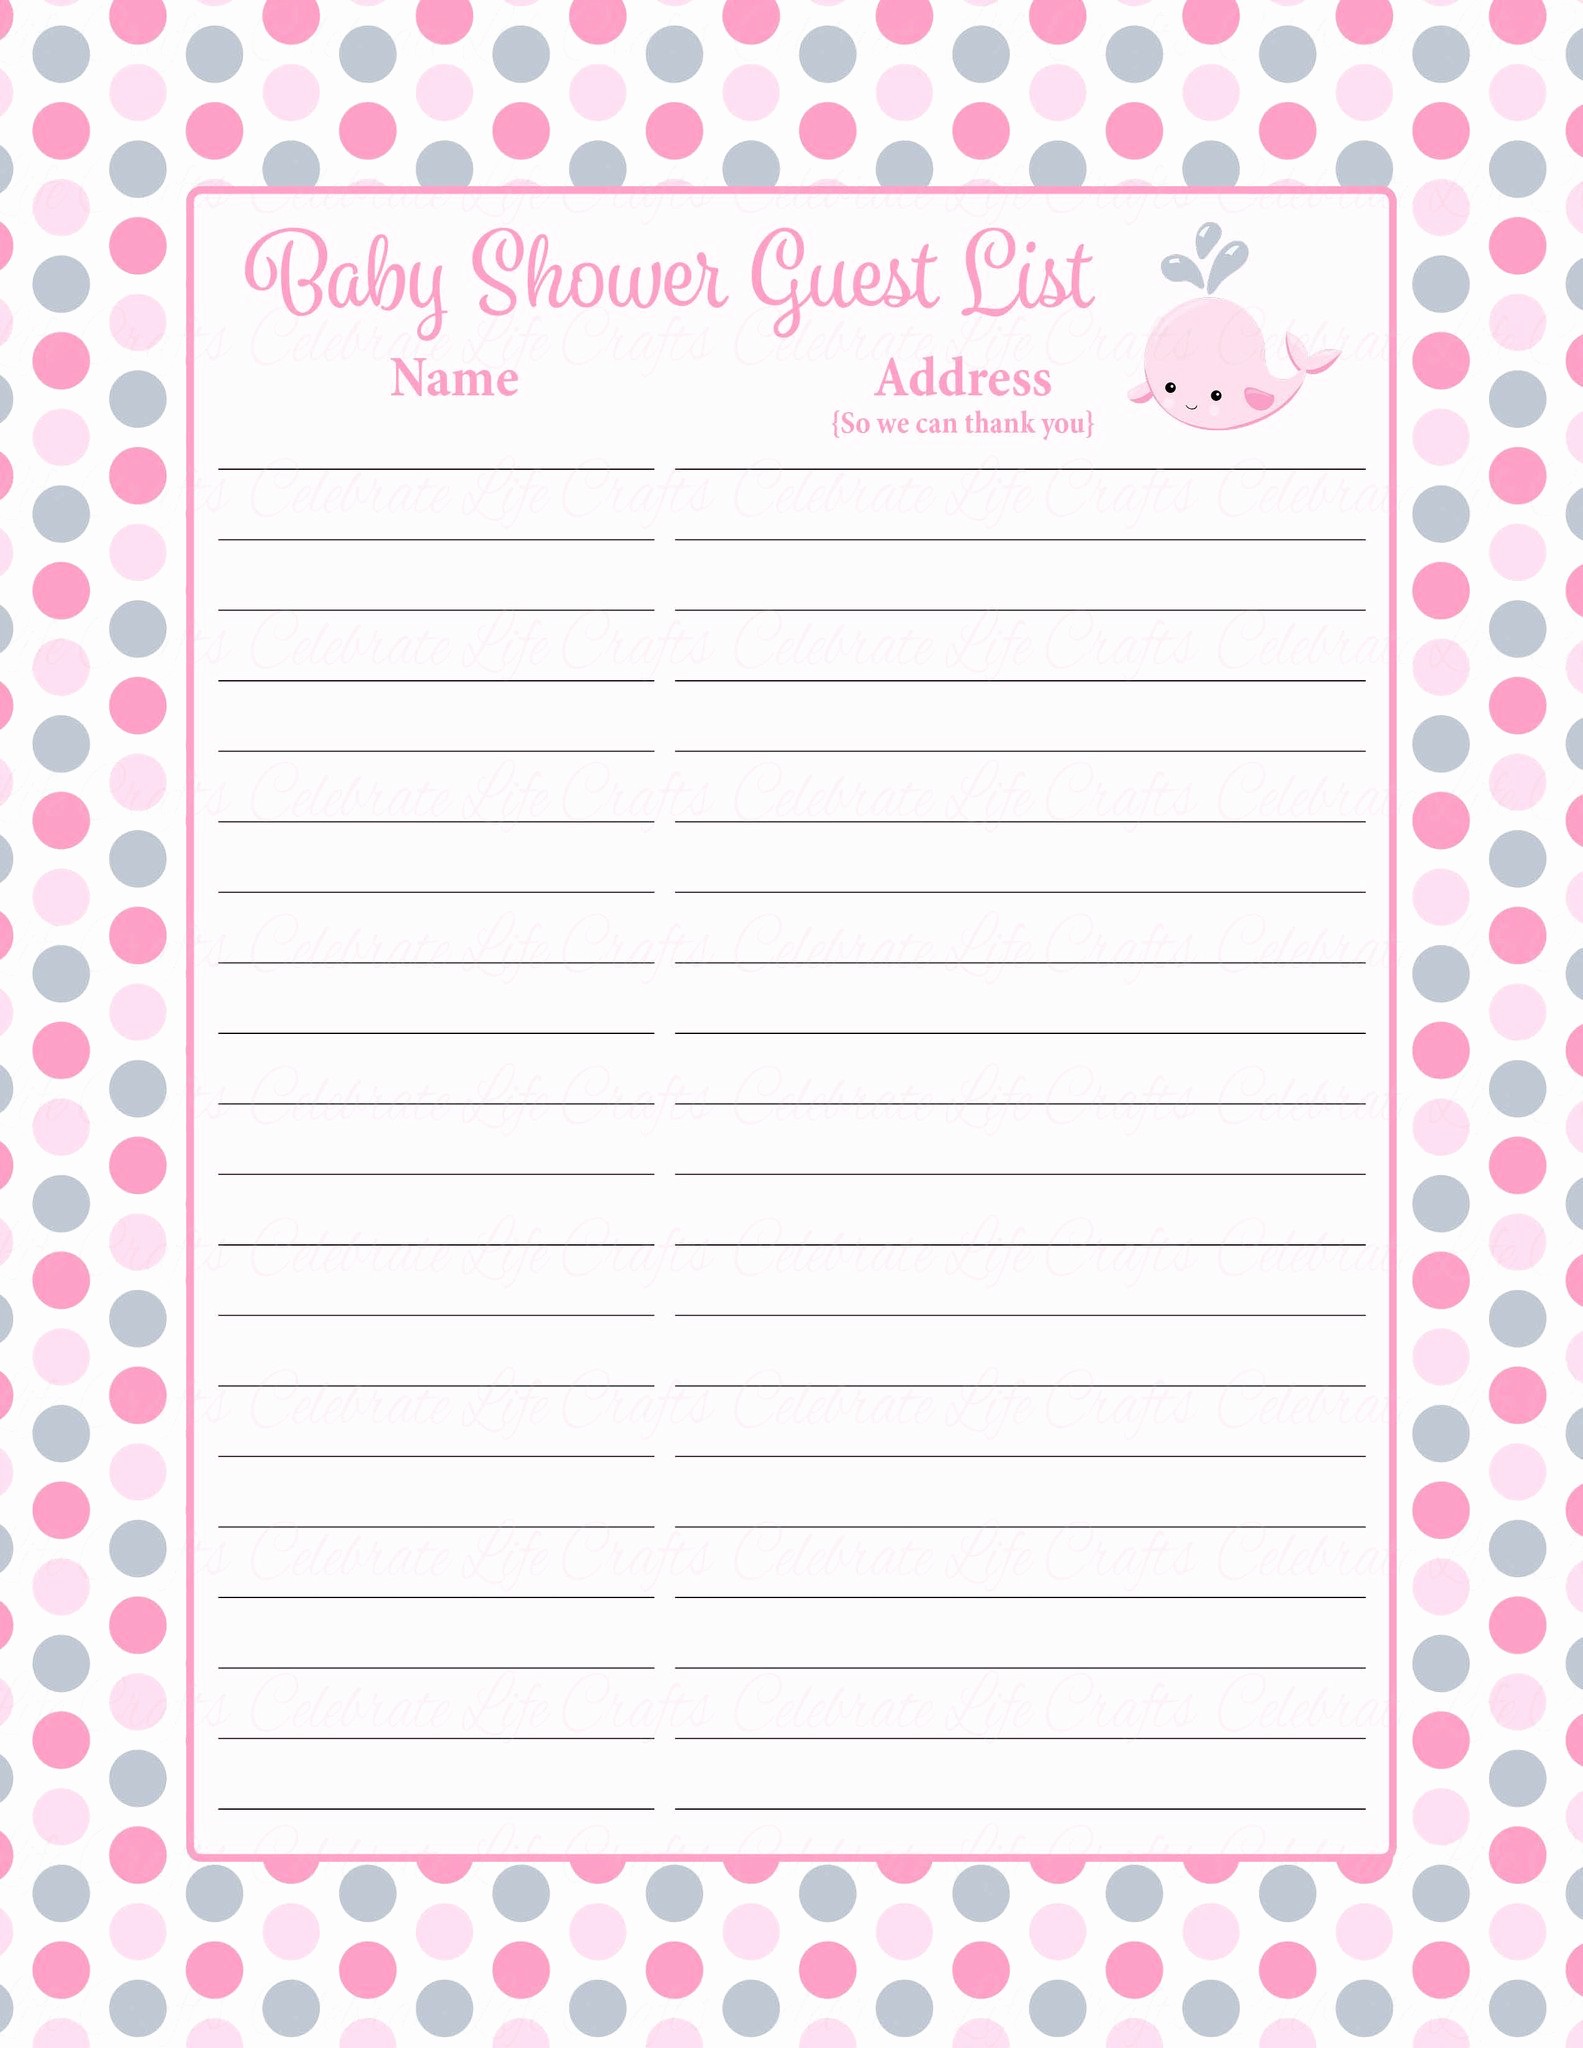 Baby Shower Invitation List Template New Printable Baby Shower Guest List Portablegasgrillweber